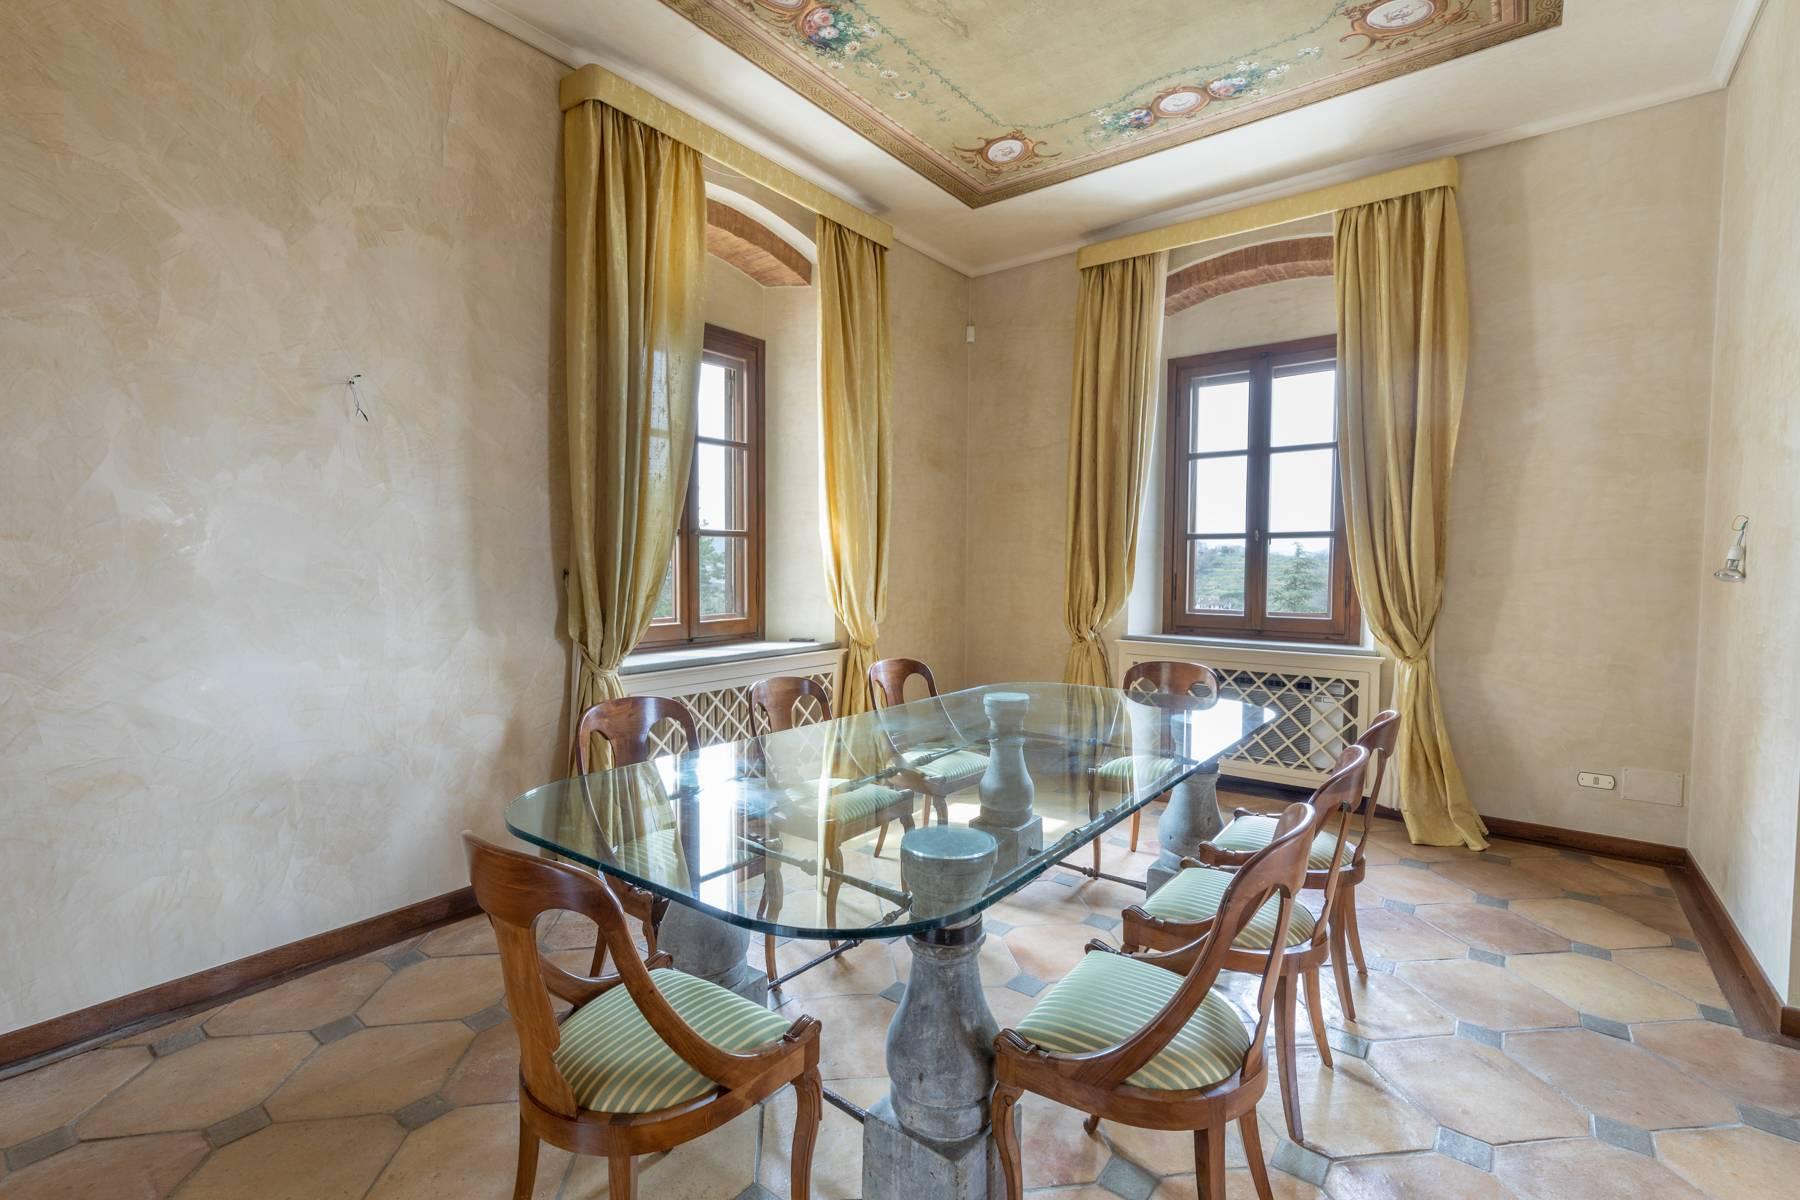 Historical villa dating back to the XVII century overlooking Arezzo - 36